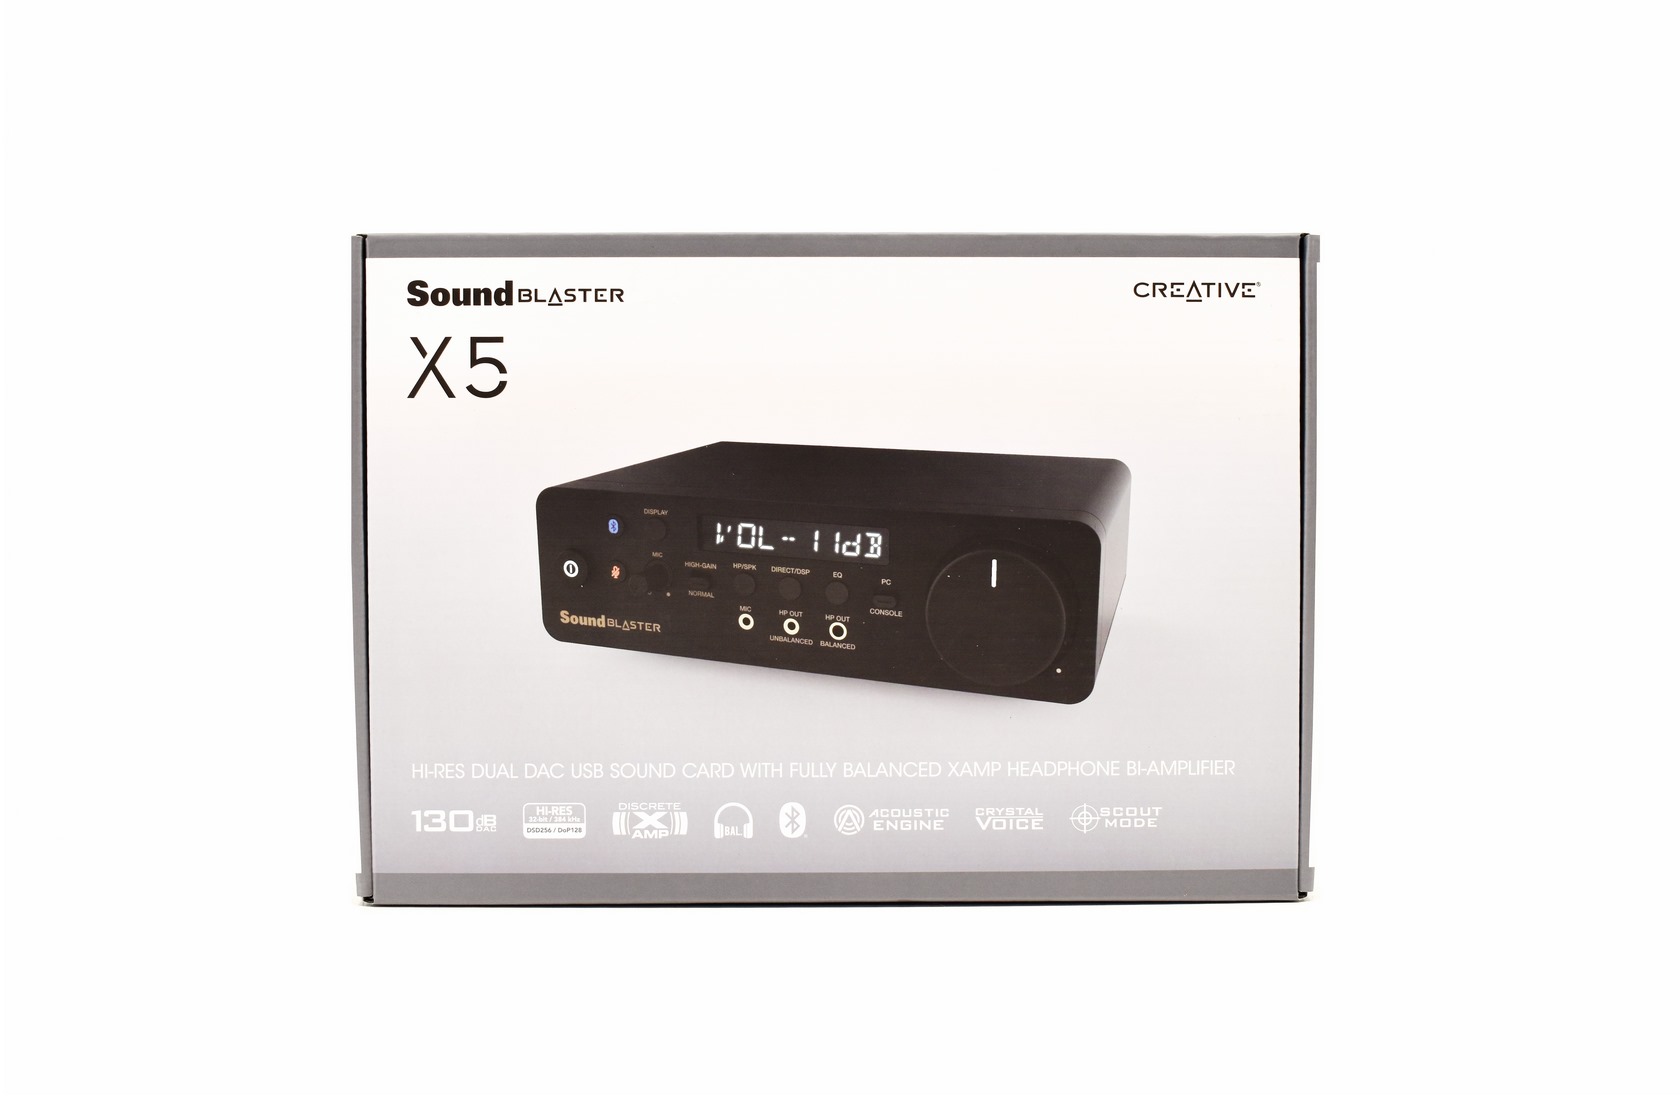 Creative Sound Blaster X5 Hi res External Dual DAC USB Sound Card